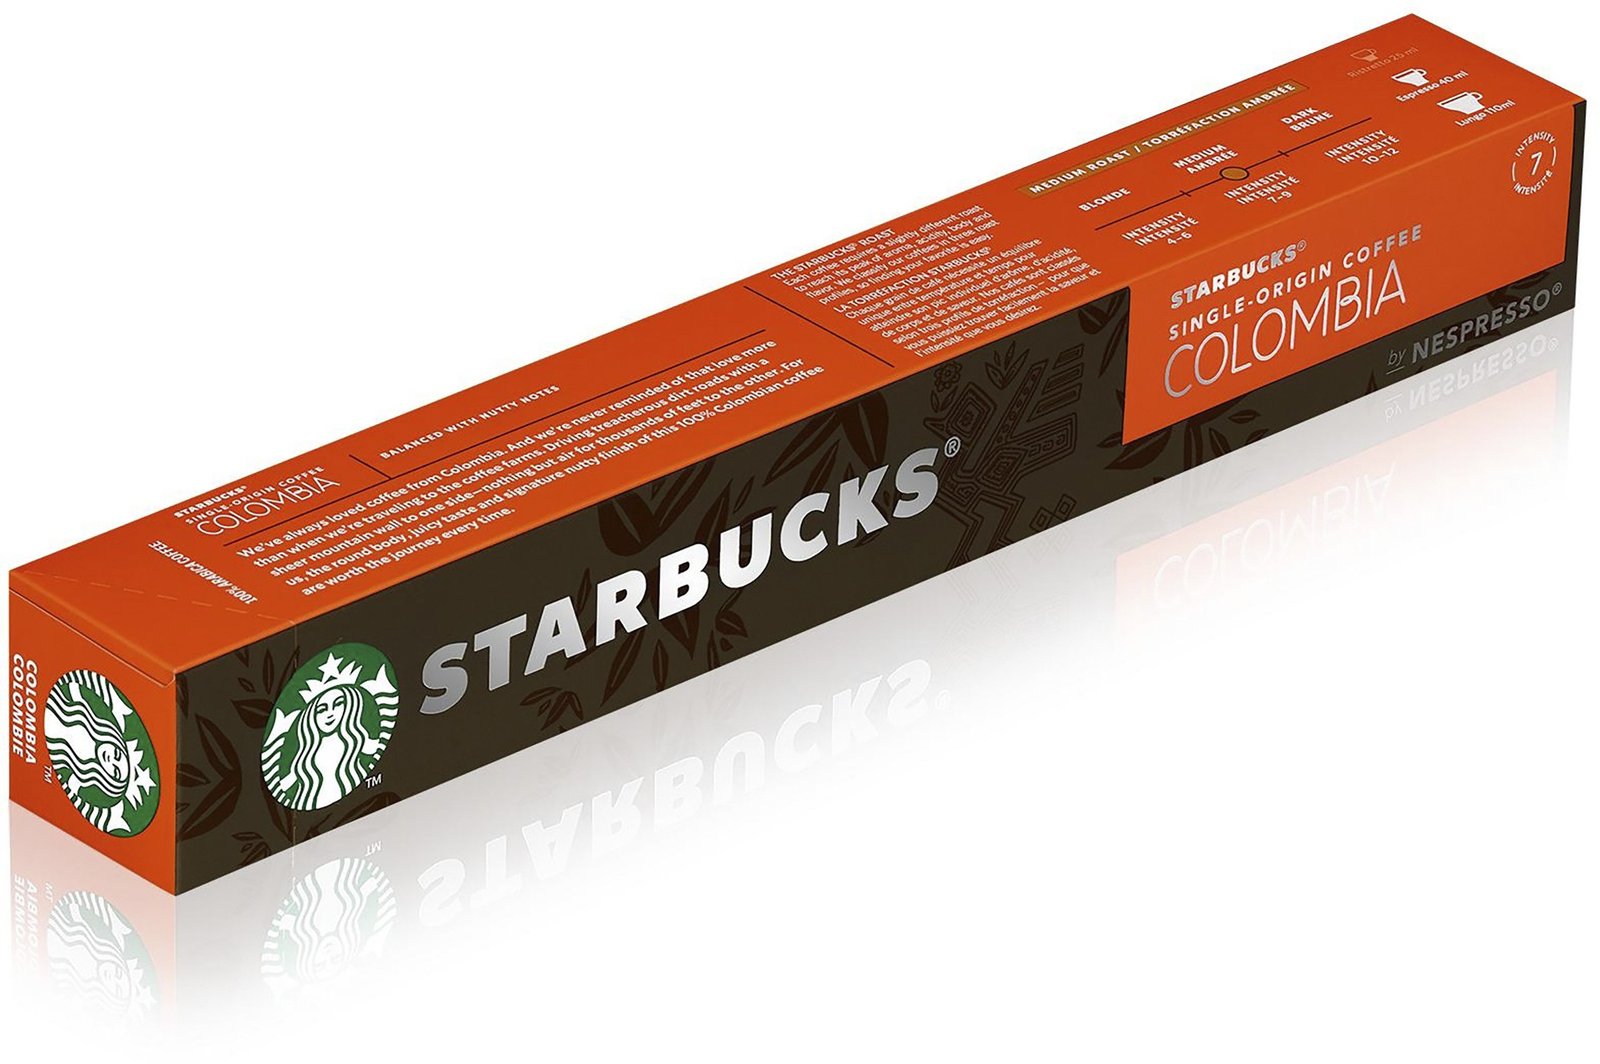 STARBUCKS Starbucks by Nespresso Colombia 10 st